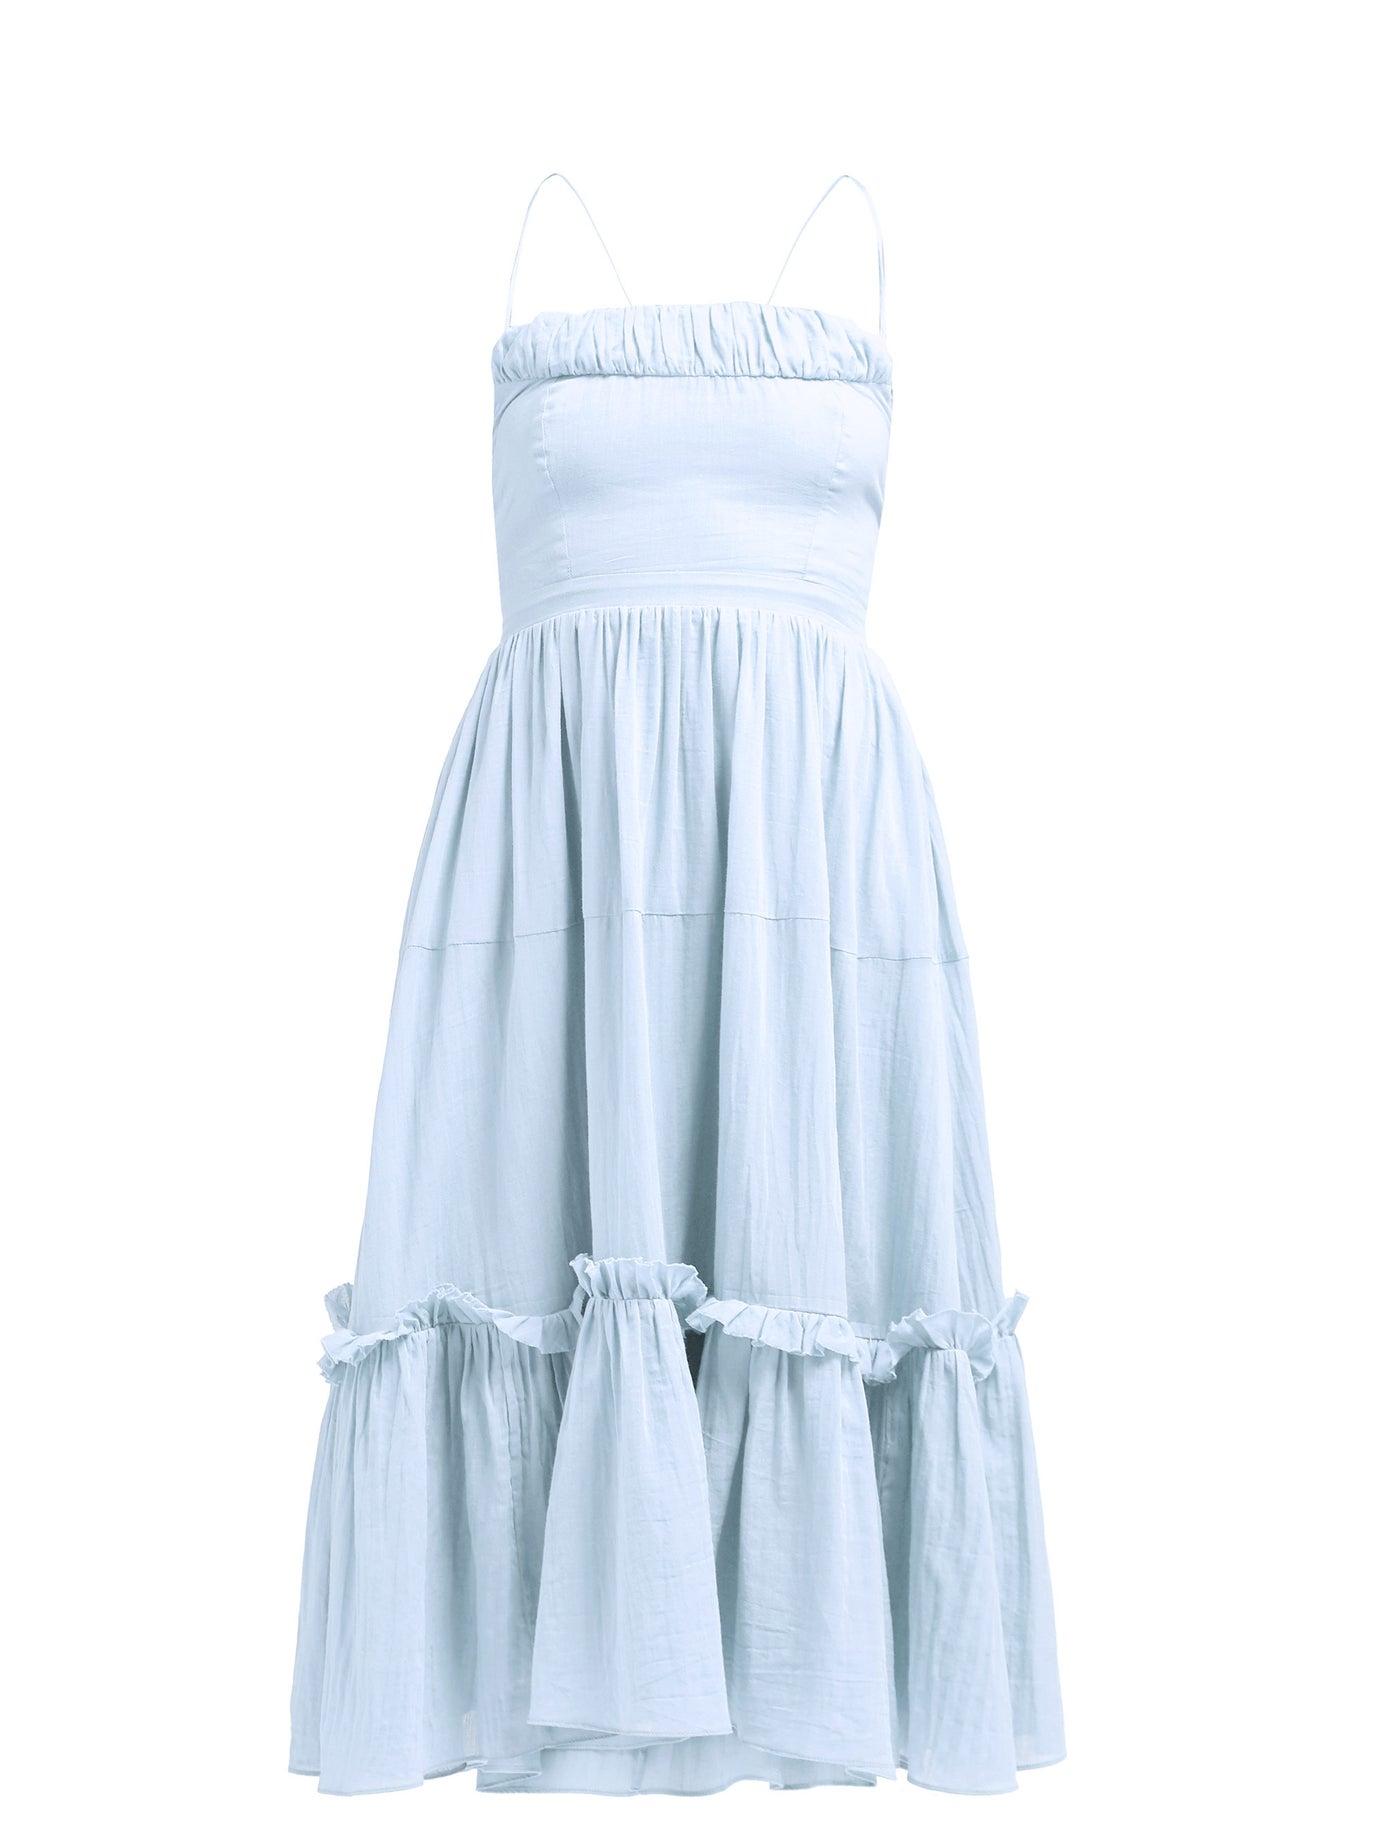 Loup Charmant Alghero Tie-back Cotton Dress in Blue - Lyst